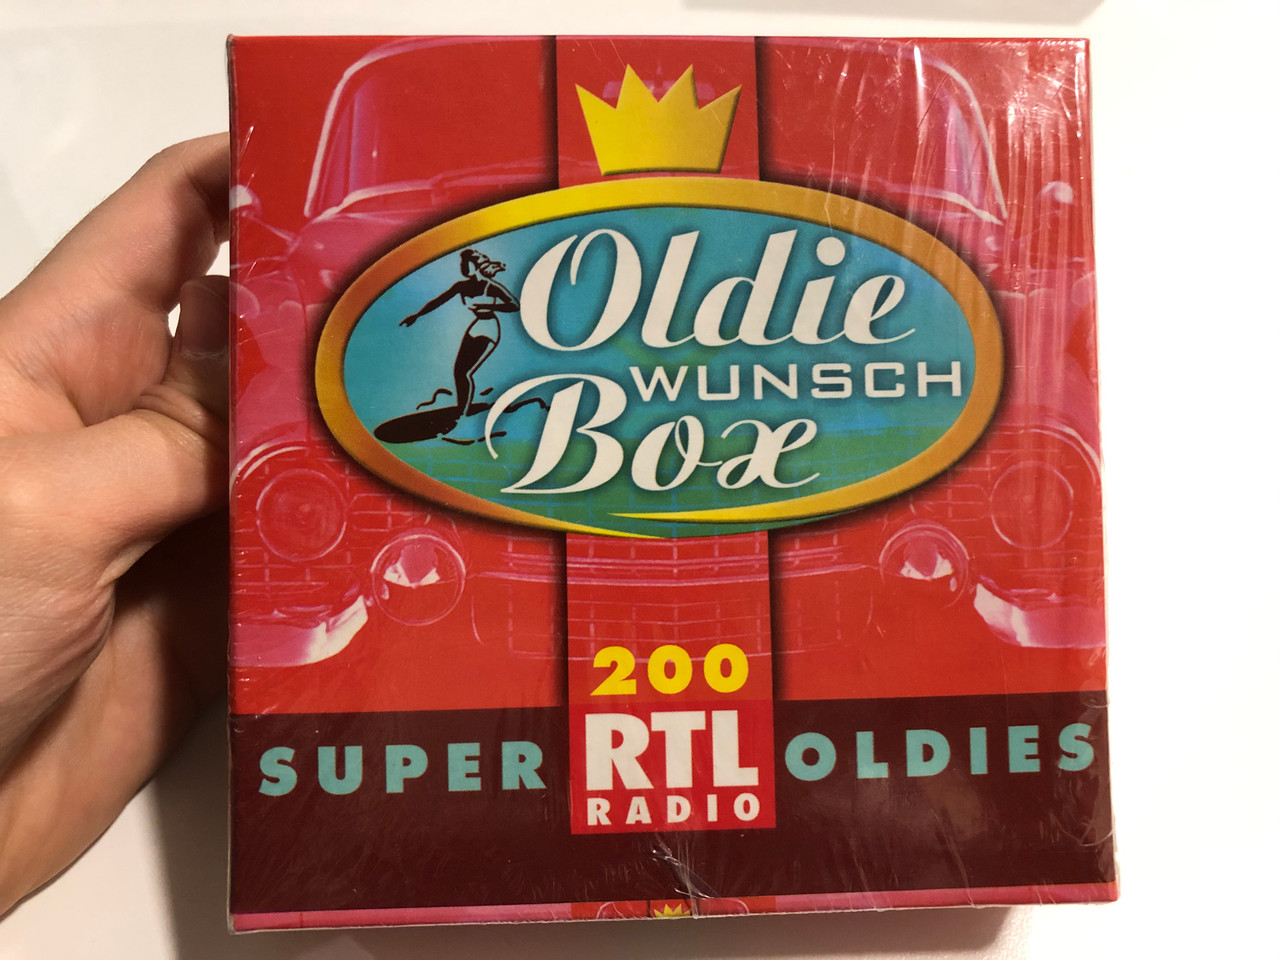 Oldie Wunsch Box (200 Super RTL Radio Oldies) / Selected Sound Carrier AG  10x Audio CD 2000 / 7619929531422 - bibleinmylanguage